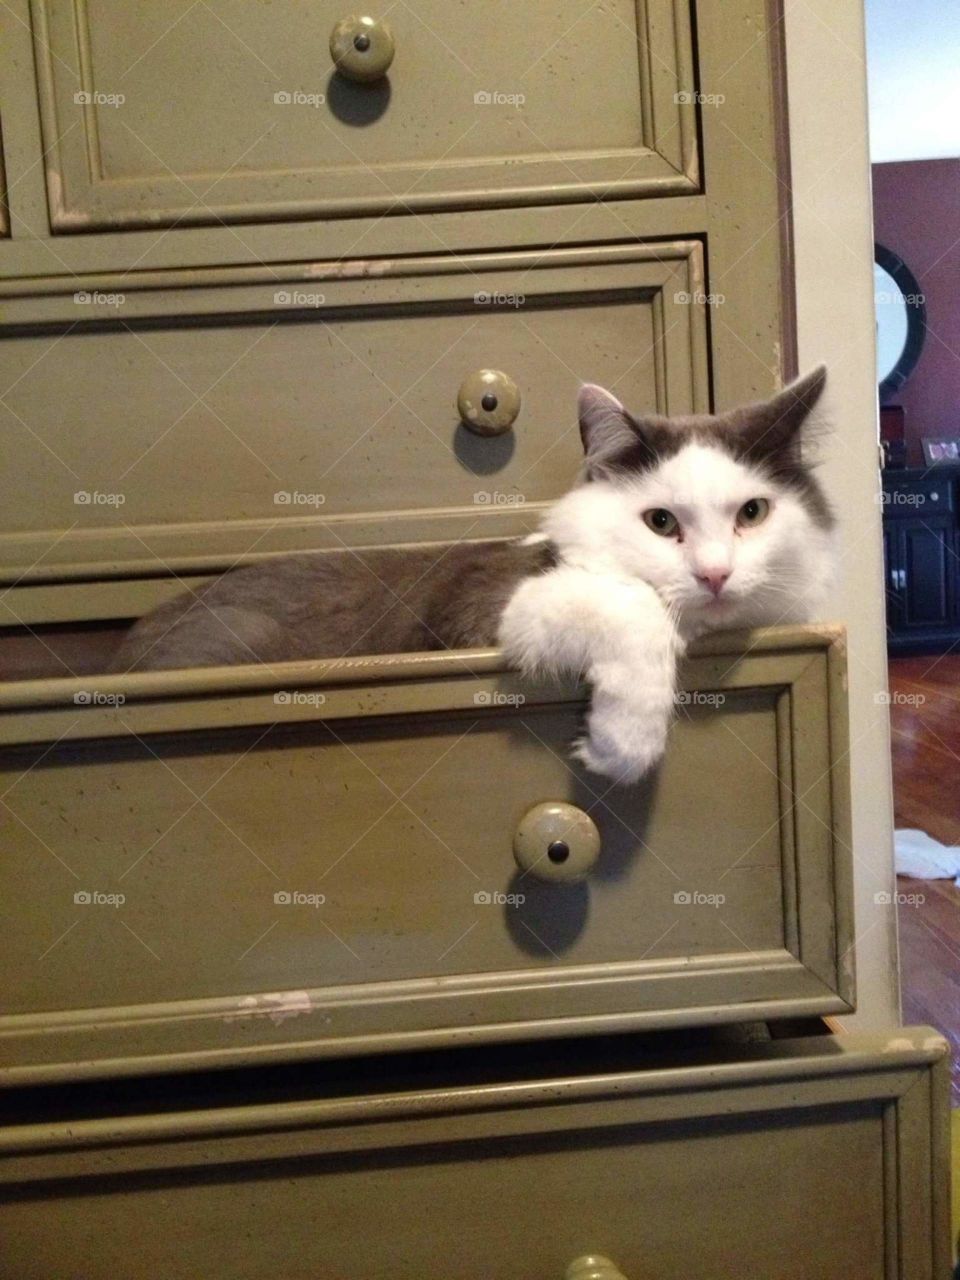 Not a cat in a hat, but a cat in a drawer. .